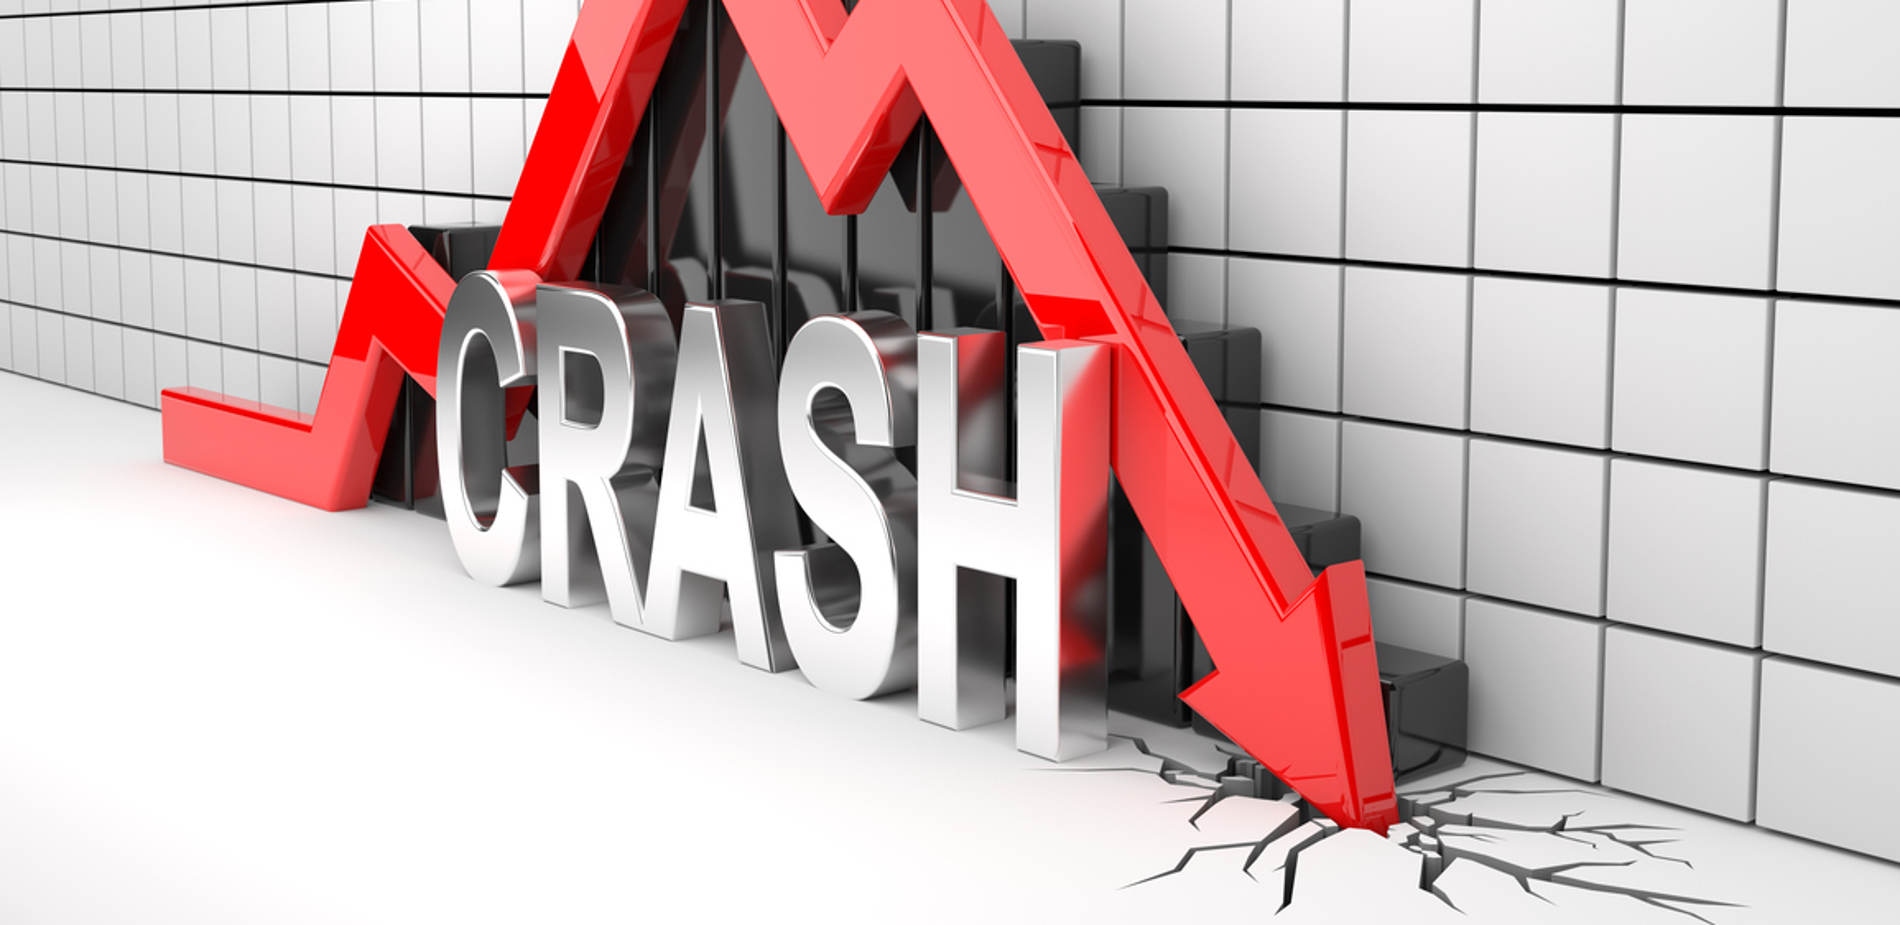 stockman market crash